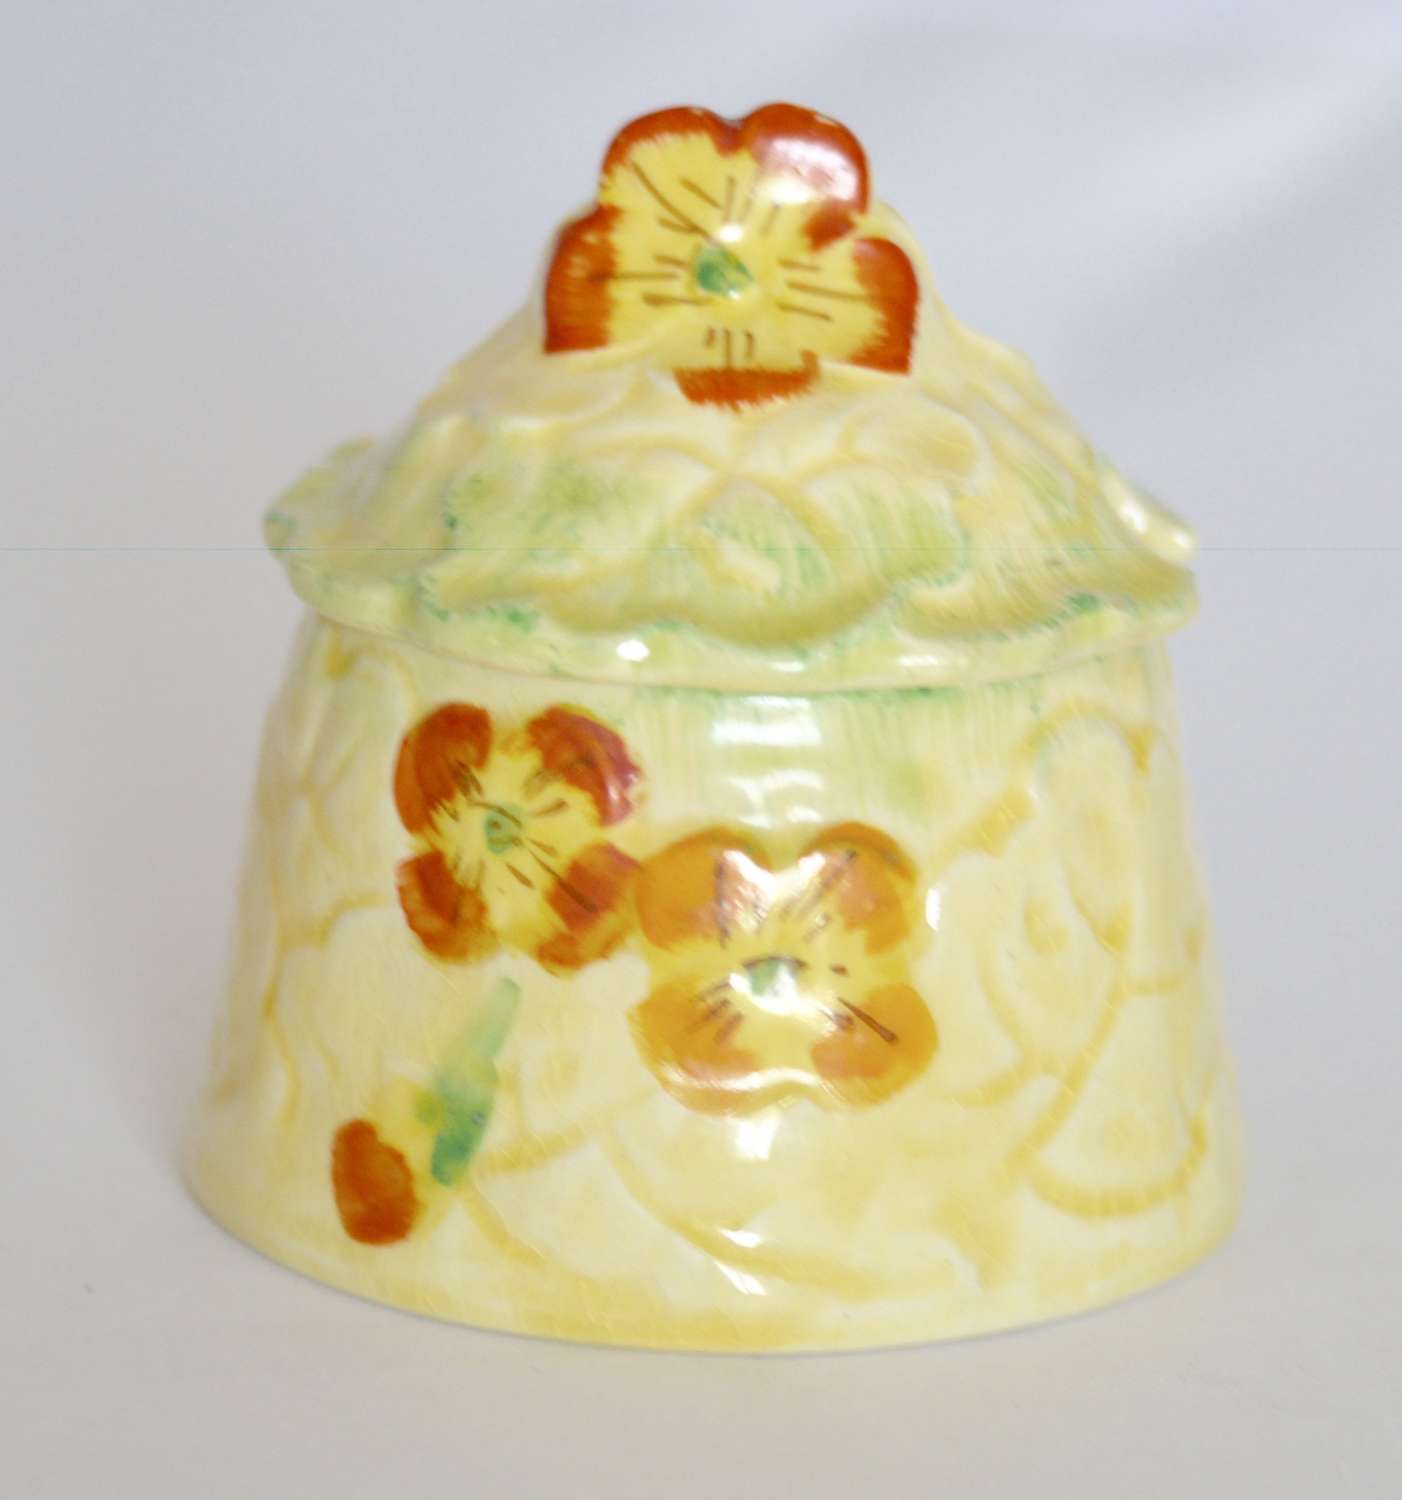 Kensington KPH Ware Jam Preserve Pot Jar c1922 - 1937 Primula Pattern